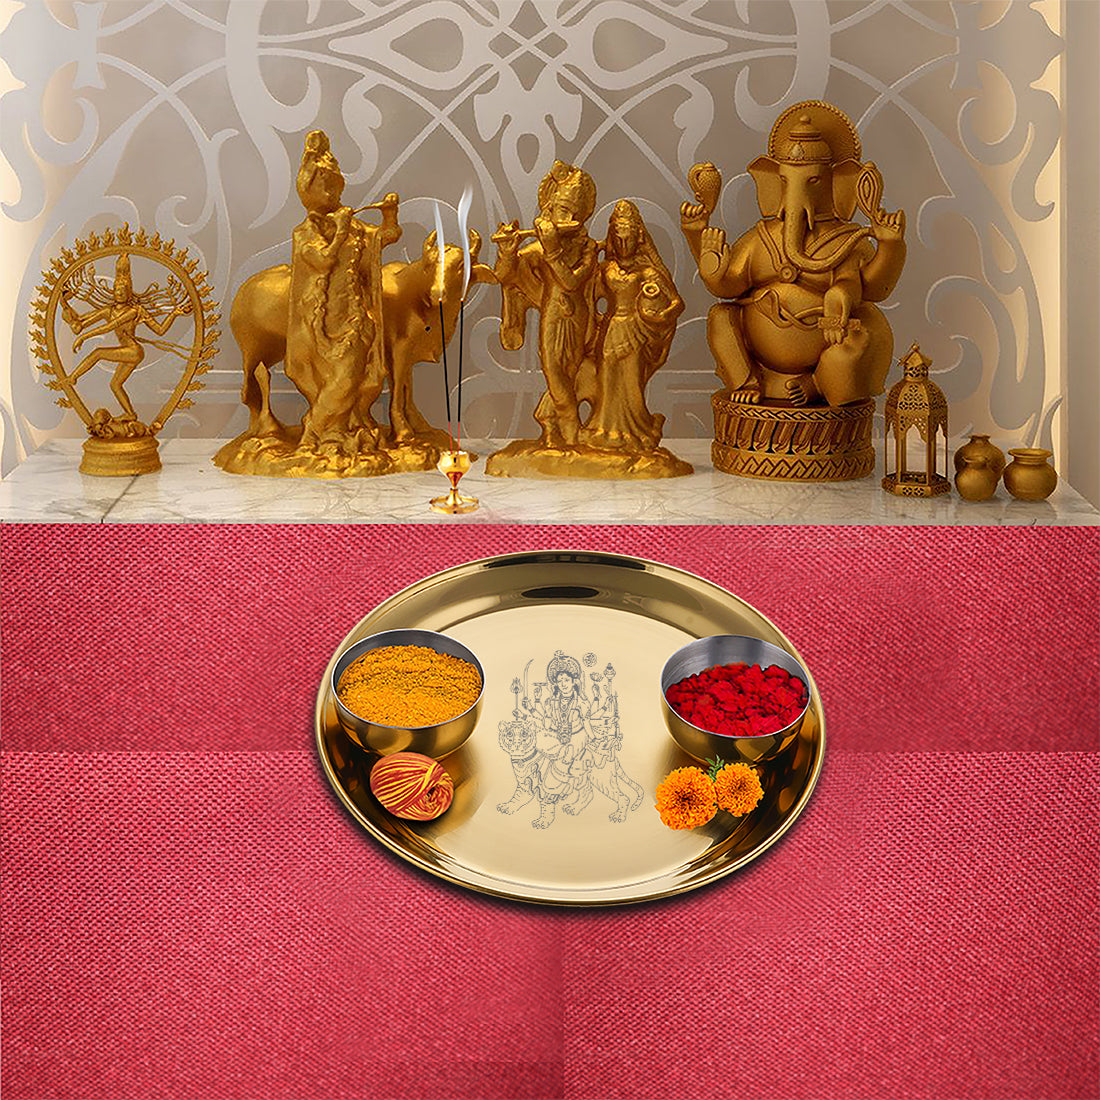 Stainless Steel Pooja Thali Set with Gold PVD Coating Durga Mata